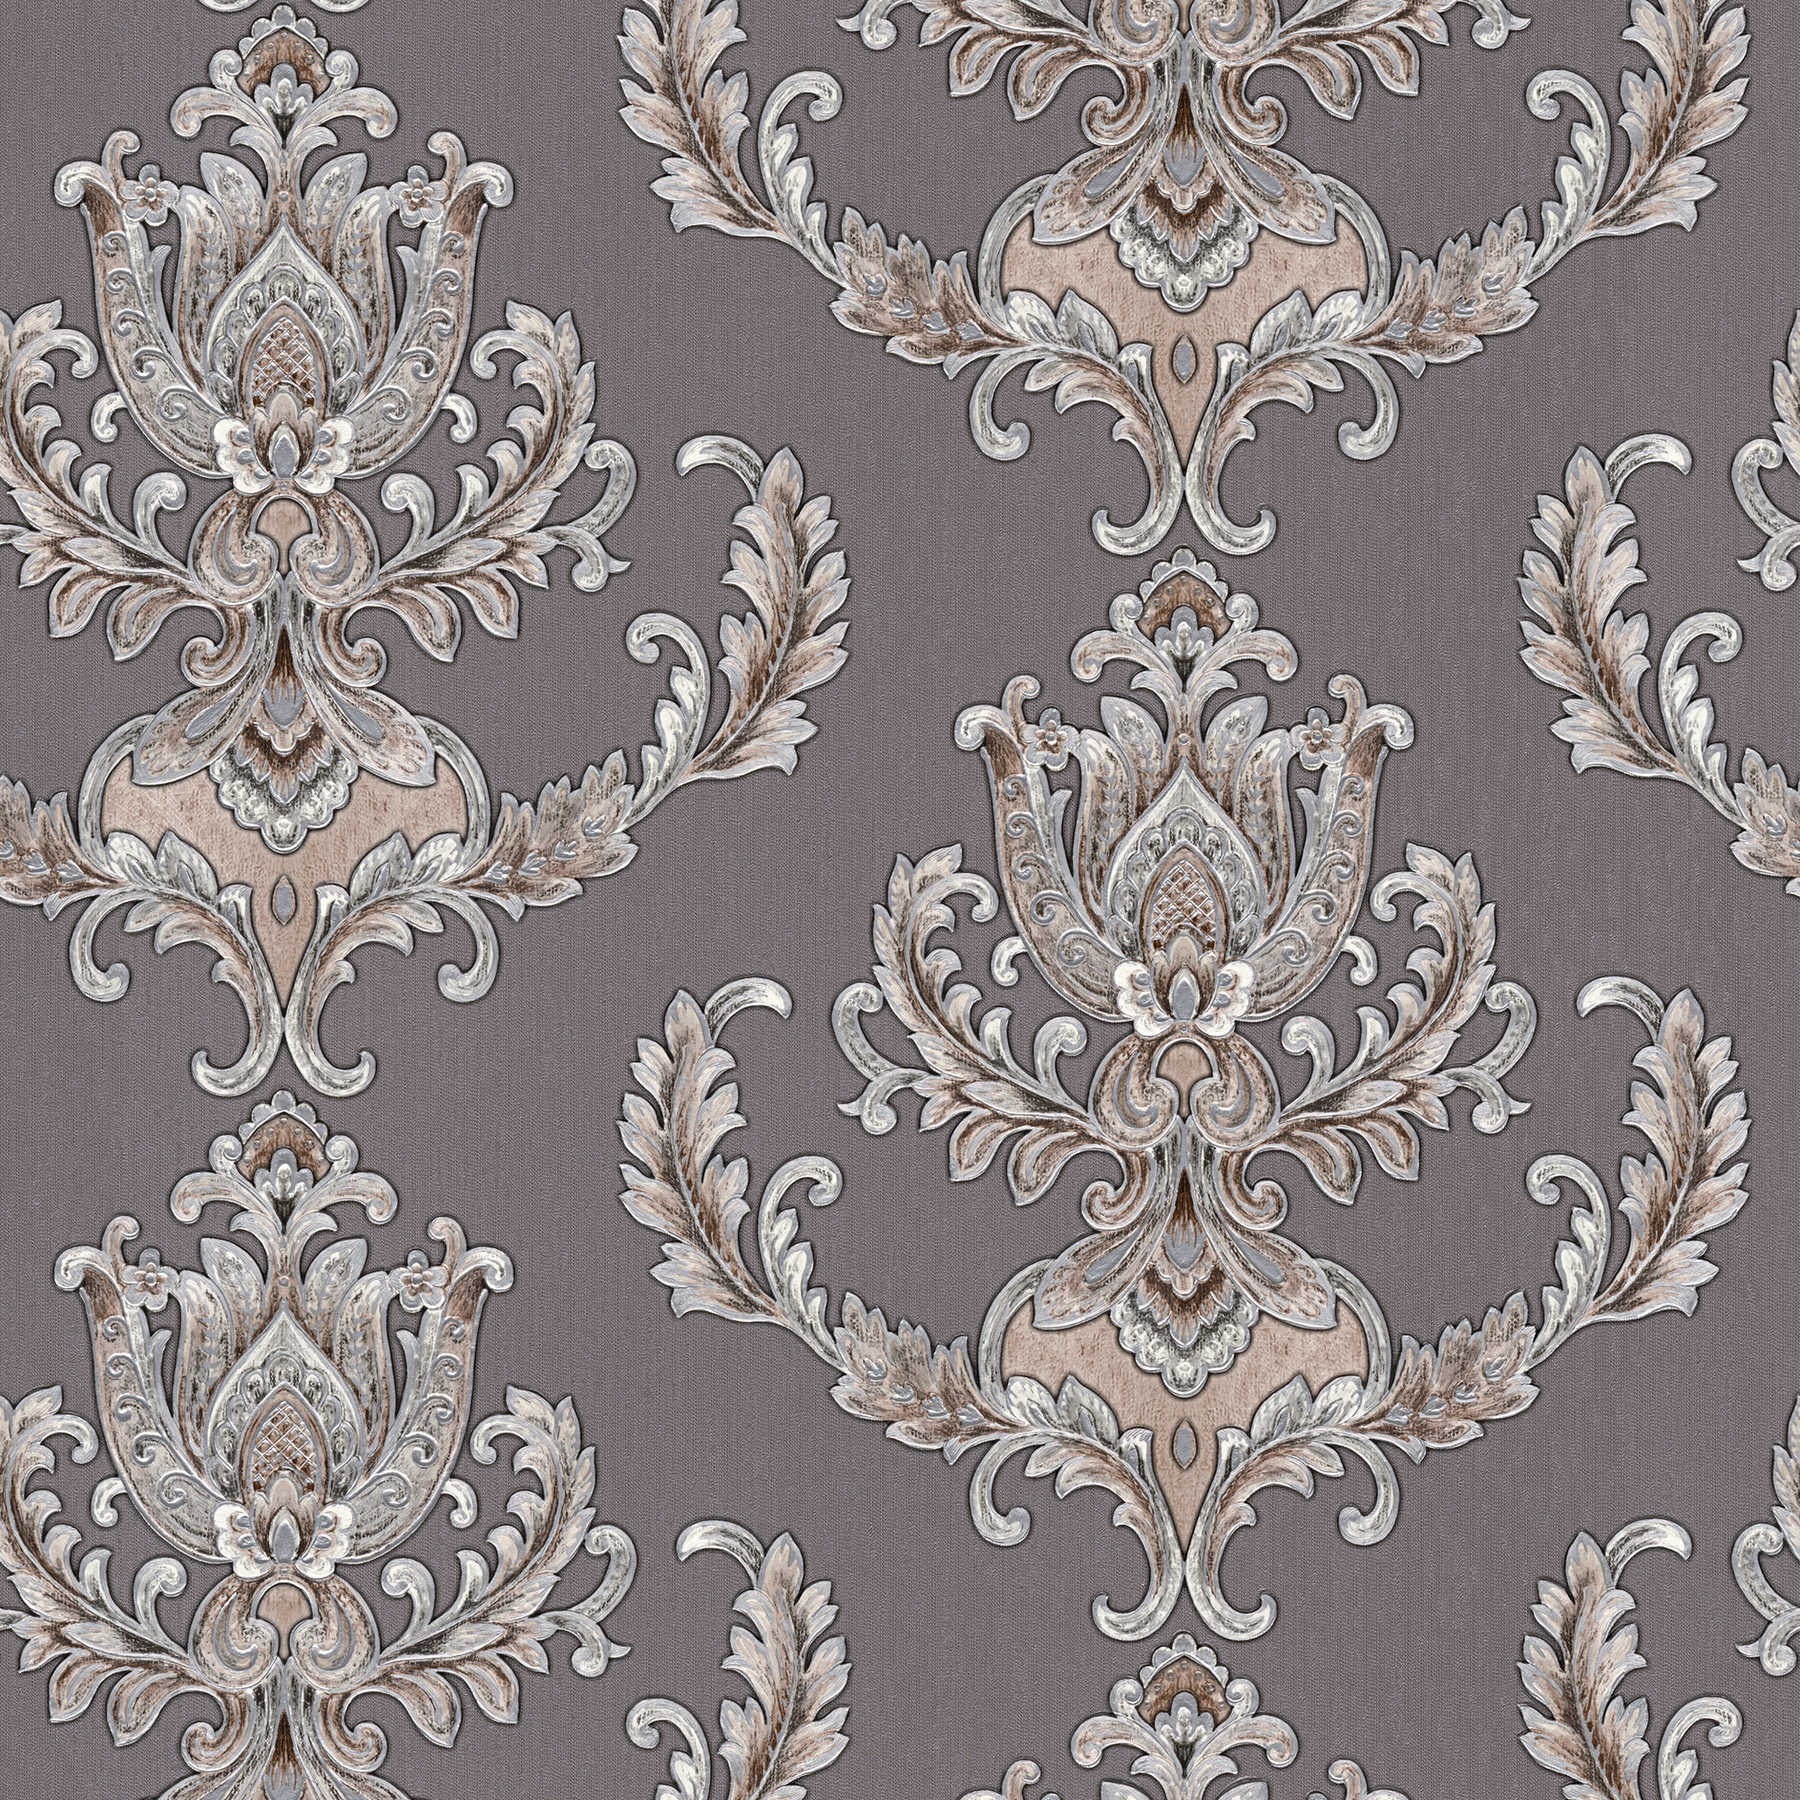 Metallic Tapete mit opulentem Ornament Design – Grau
